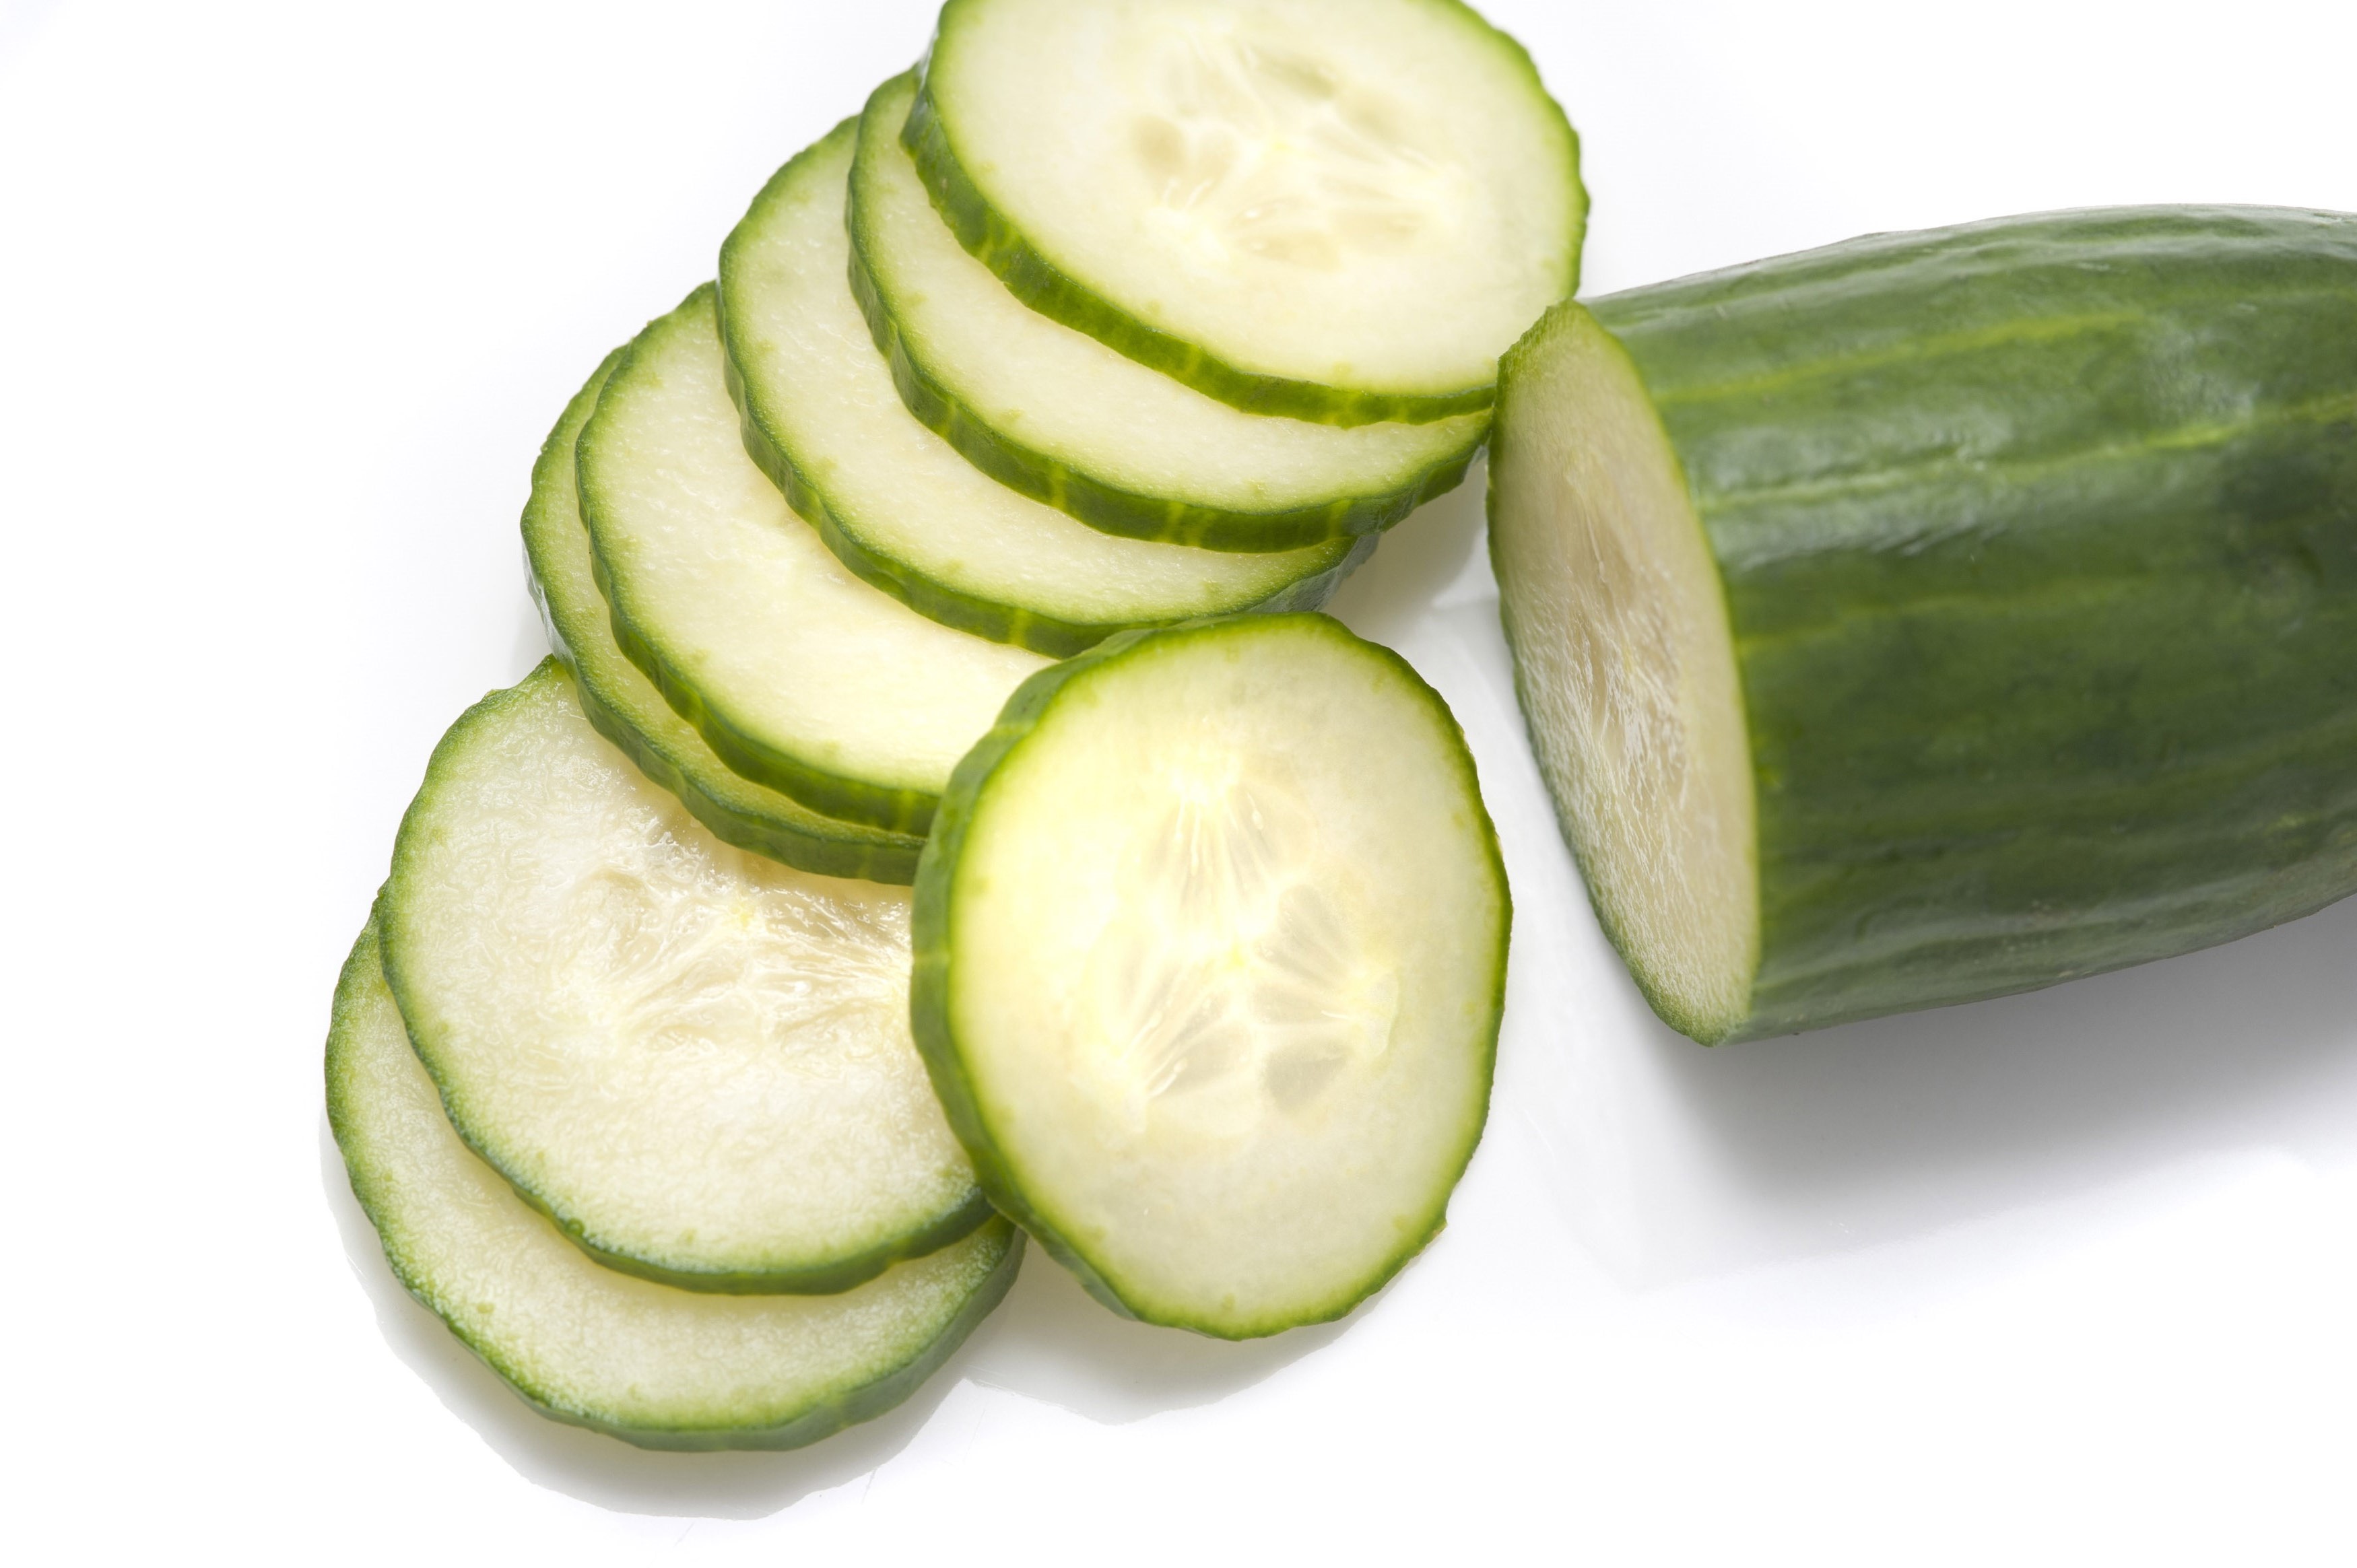 Freshly sliced cucumber - Free Stock Image